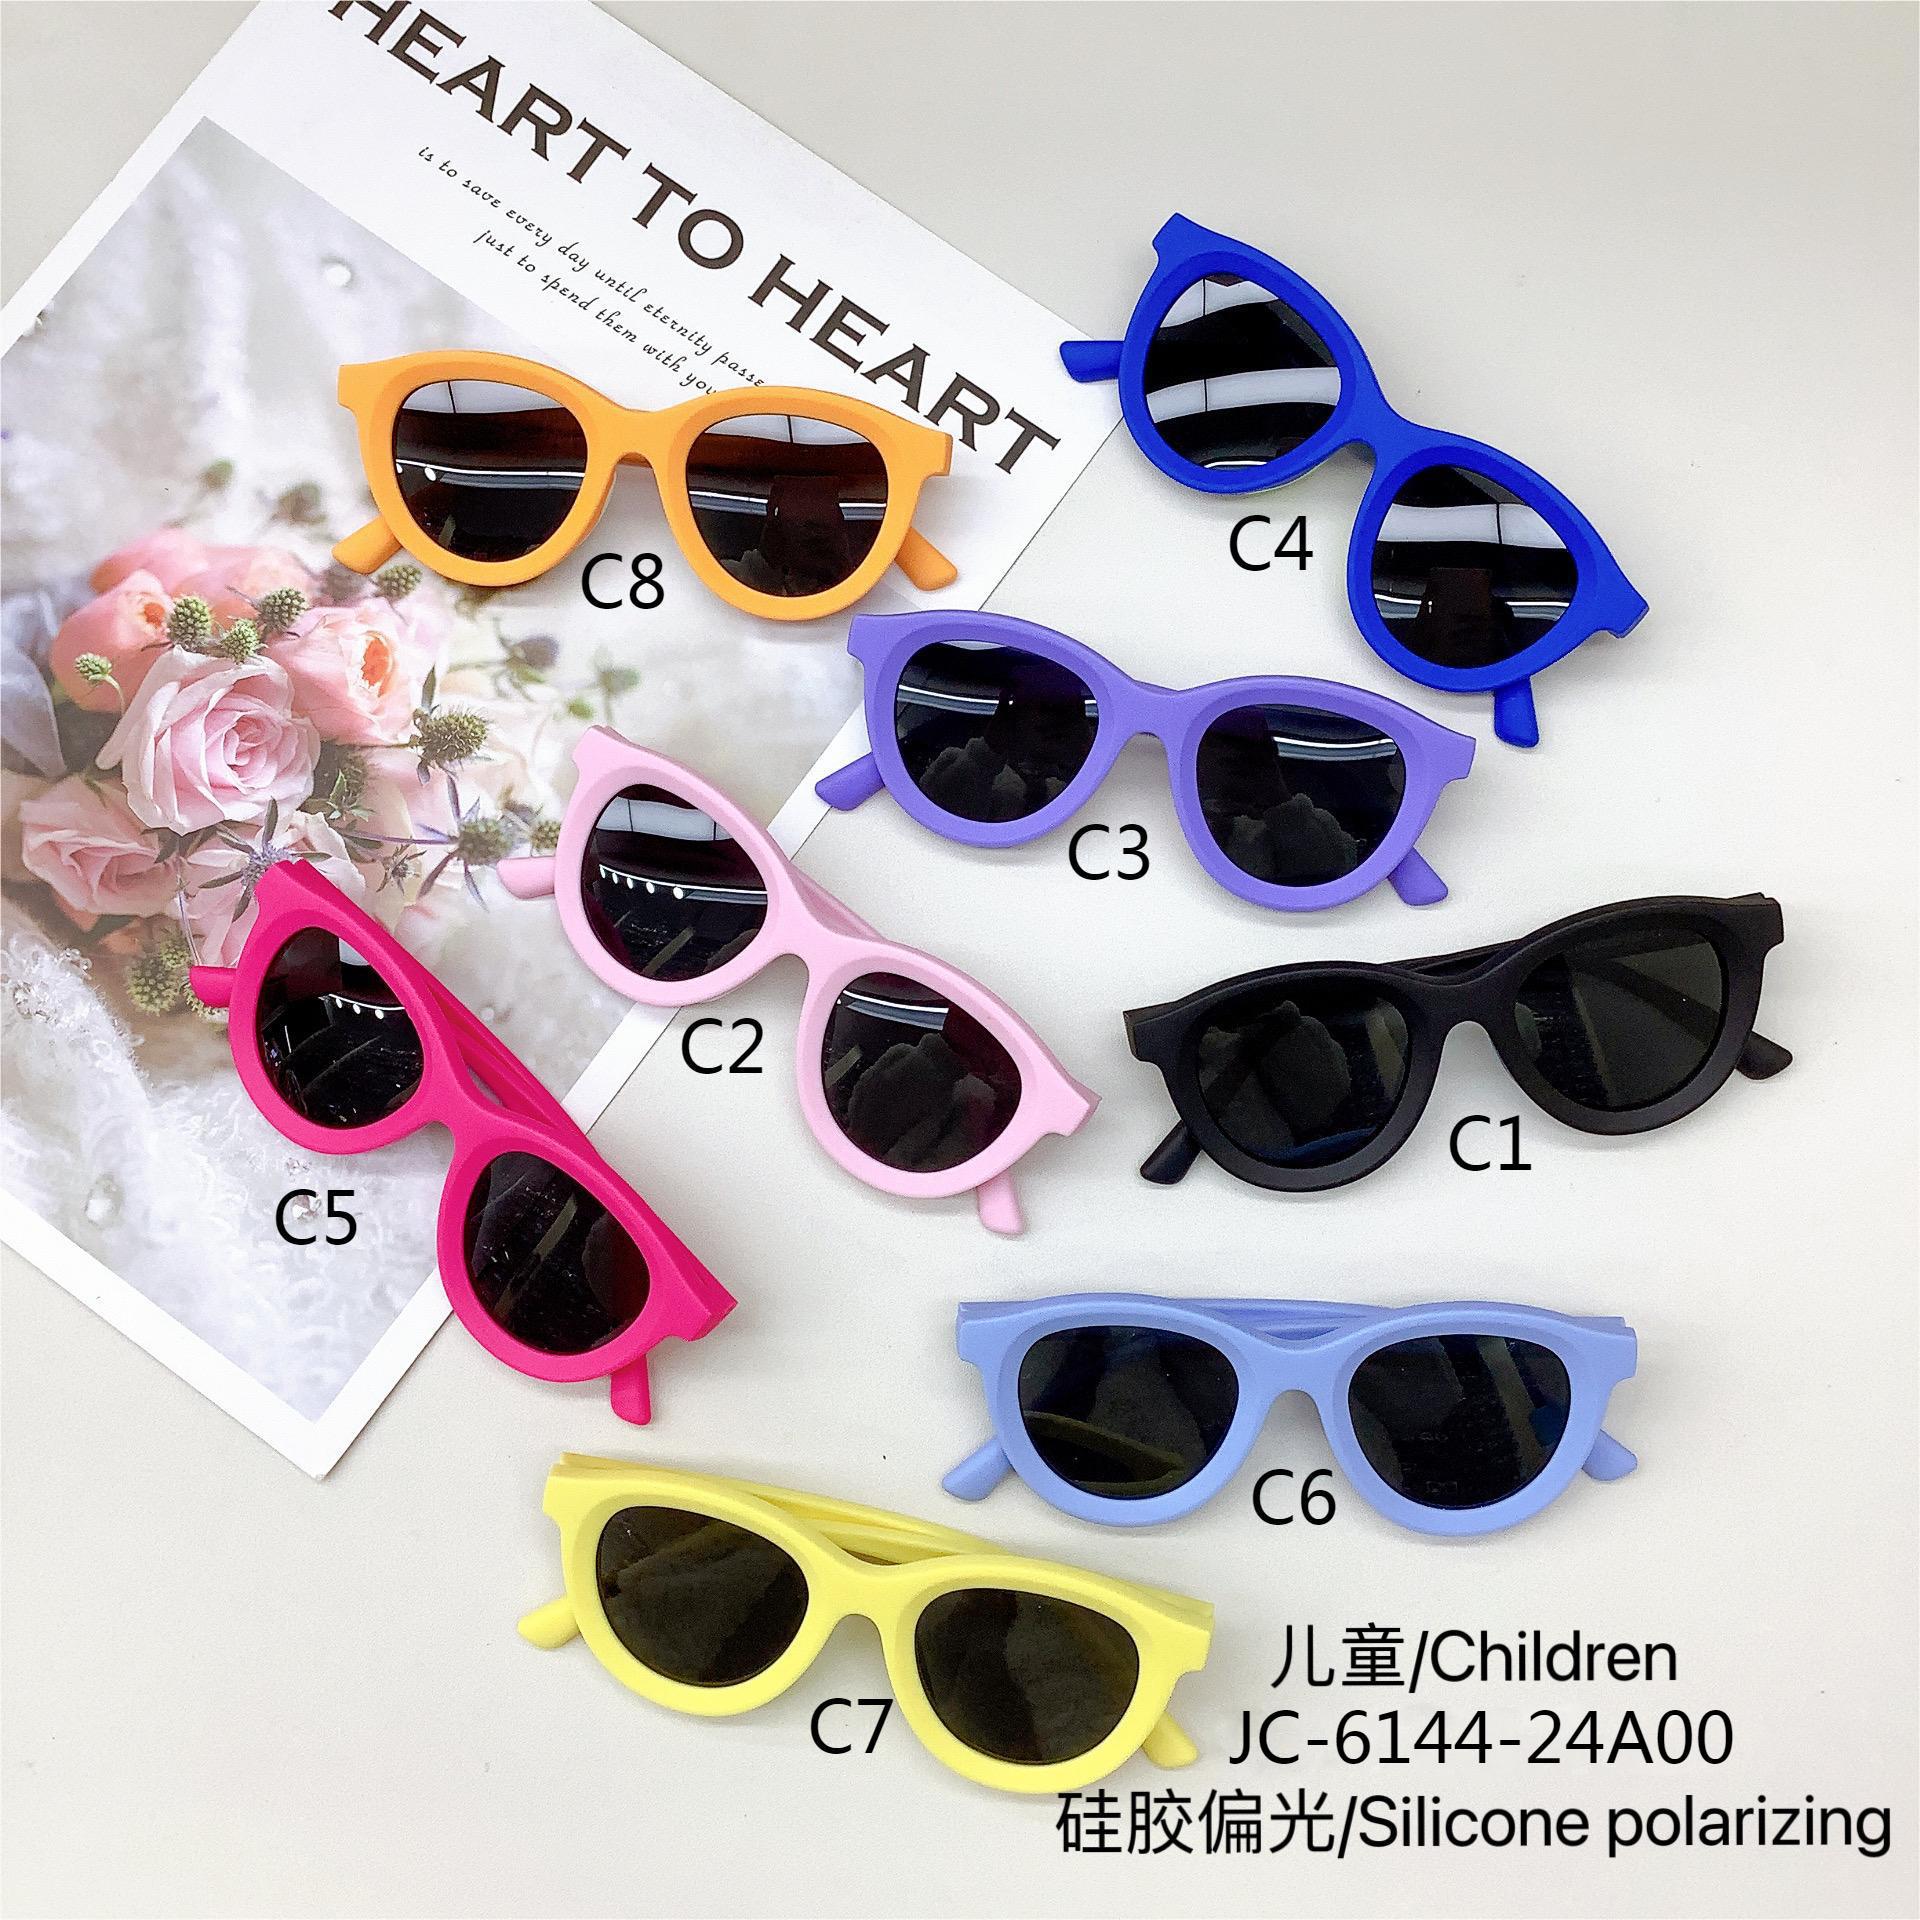 New Silicone Polarized Kids Sunglasses Sun Protection UV Protection Girls Wear Glasses Sun Protection Boys Glasses